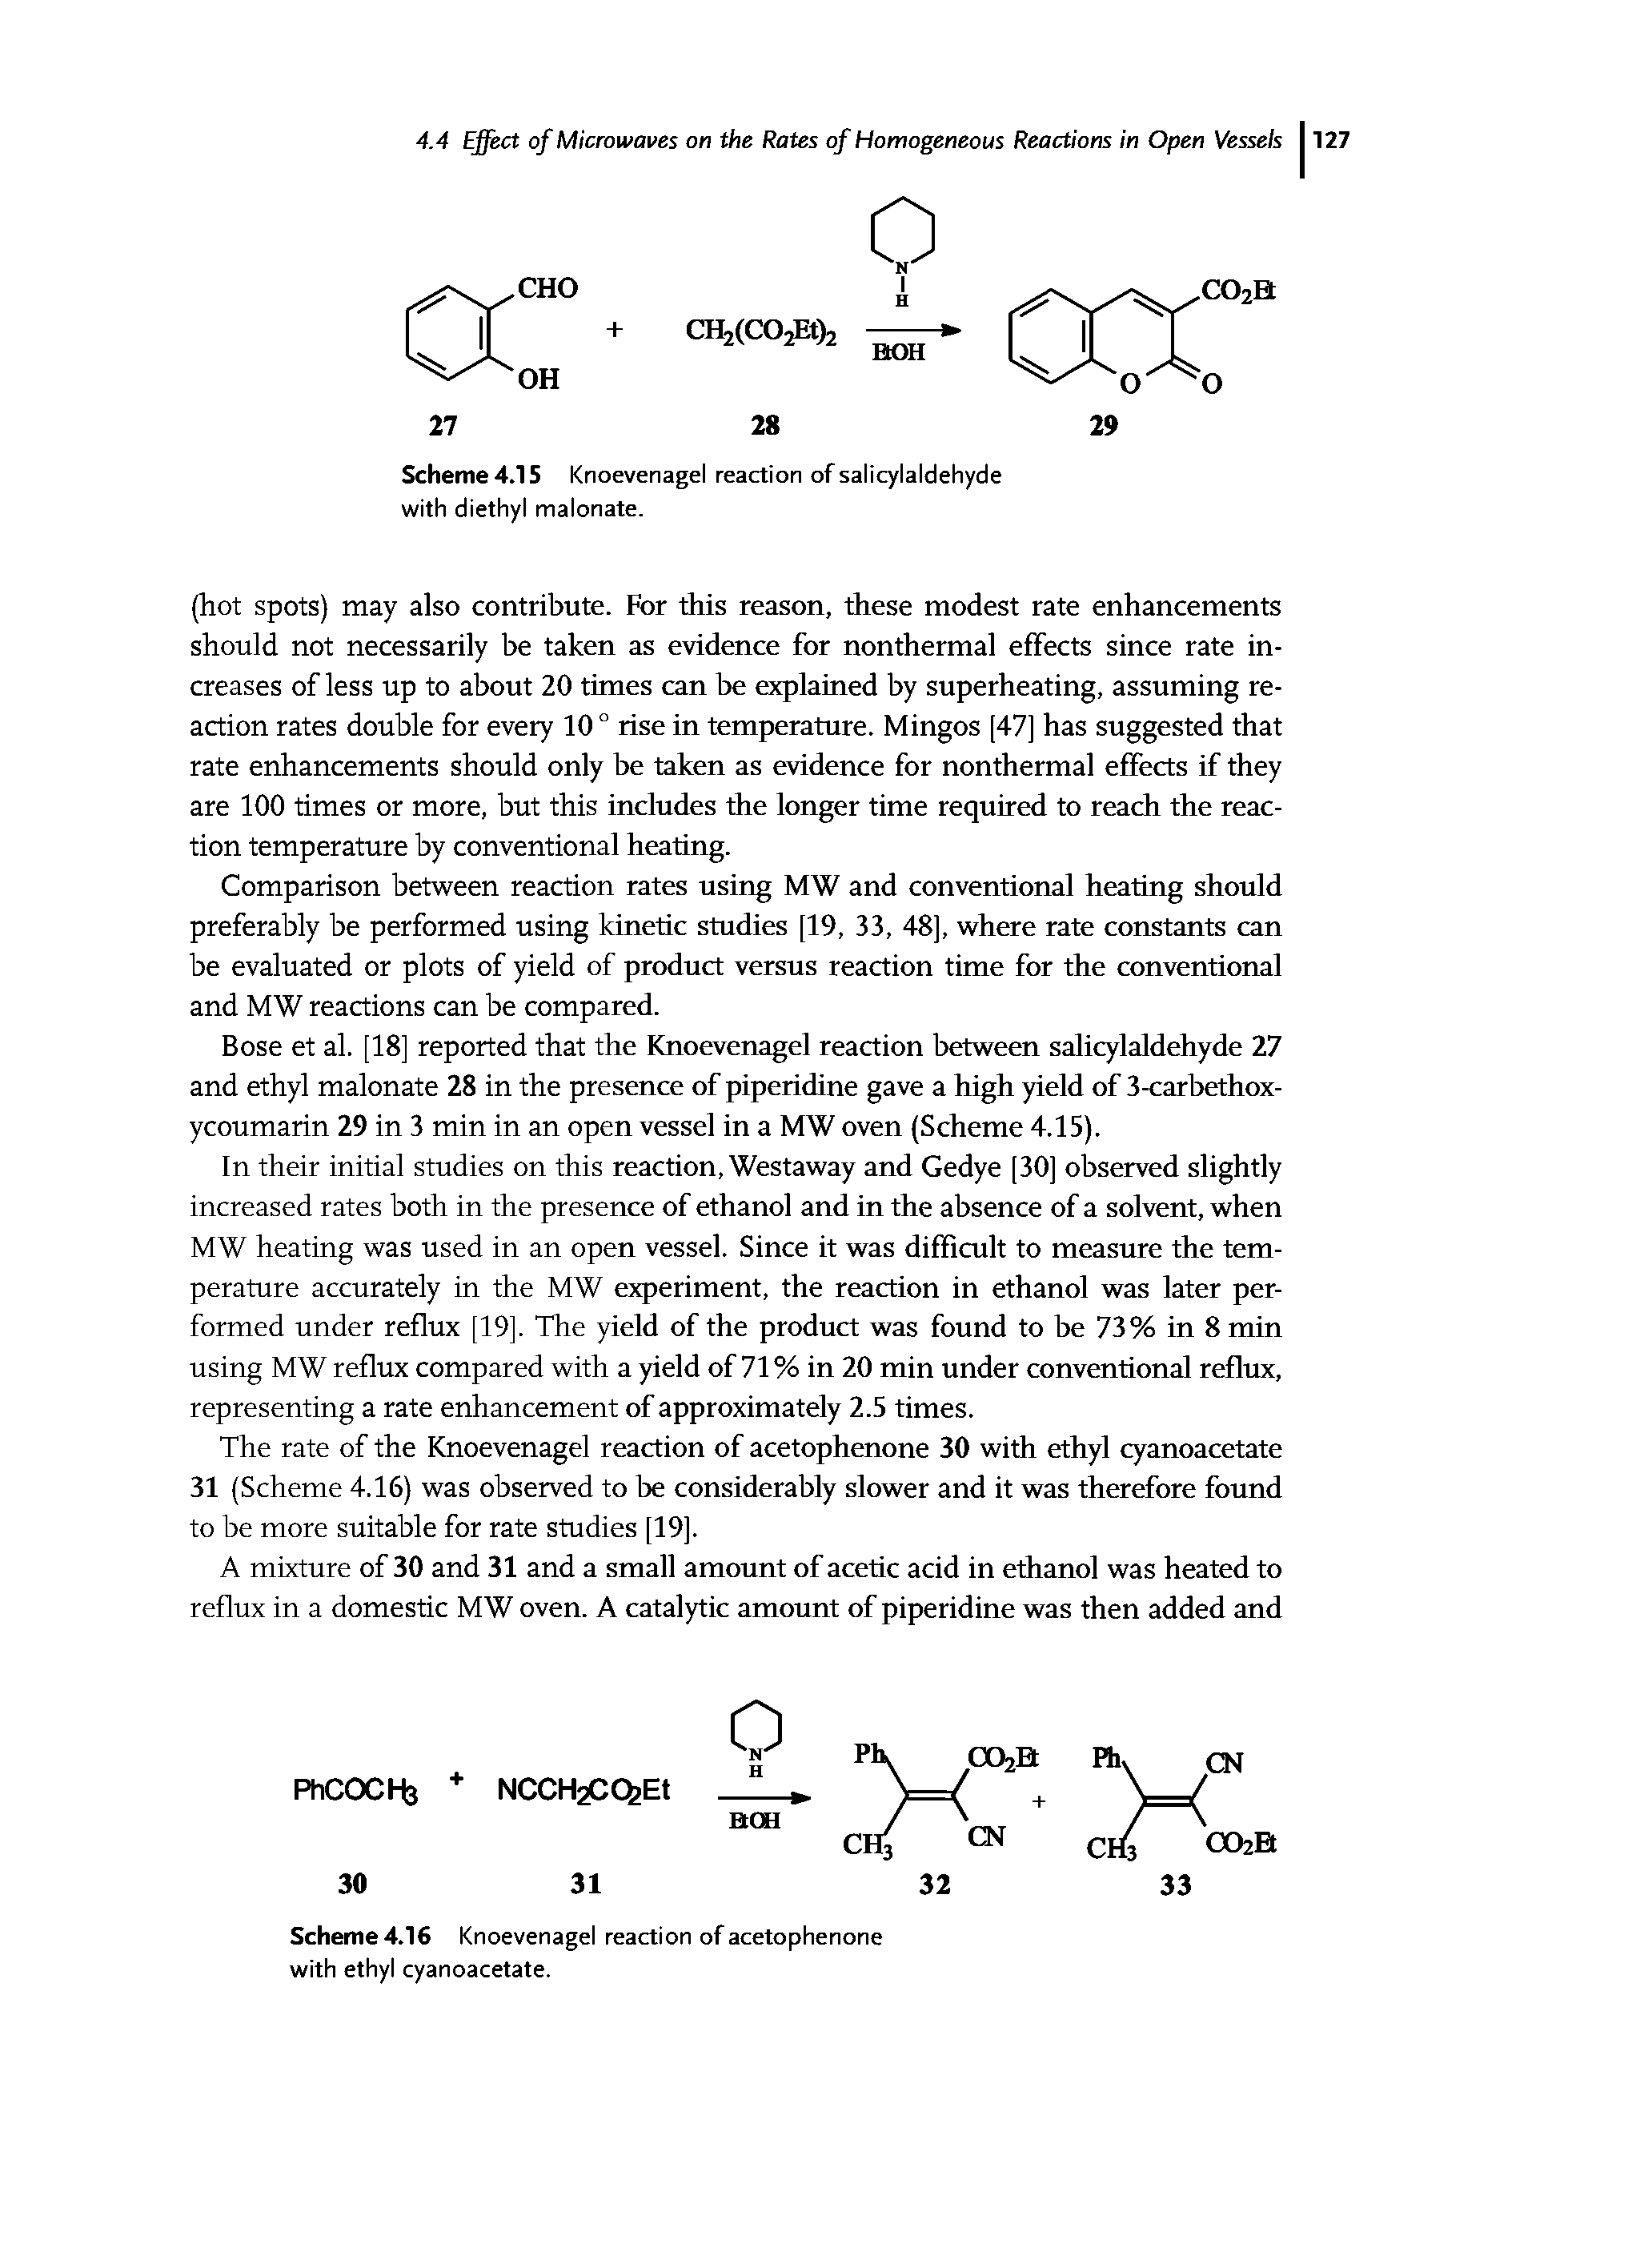 Scheme 4.16 Knoevenagel reaction of acetophenone with ethyl cyanoacetate.